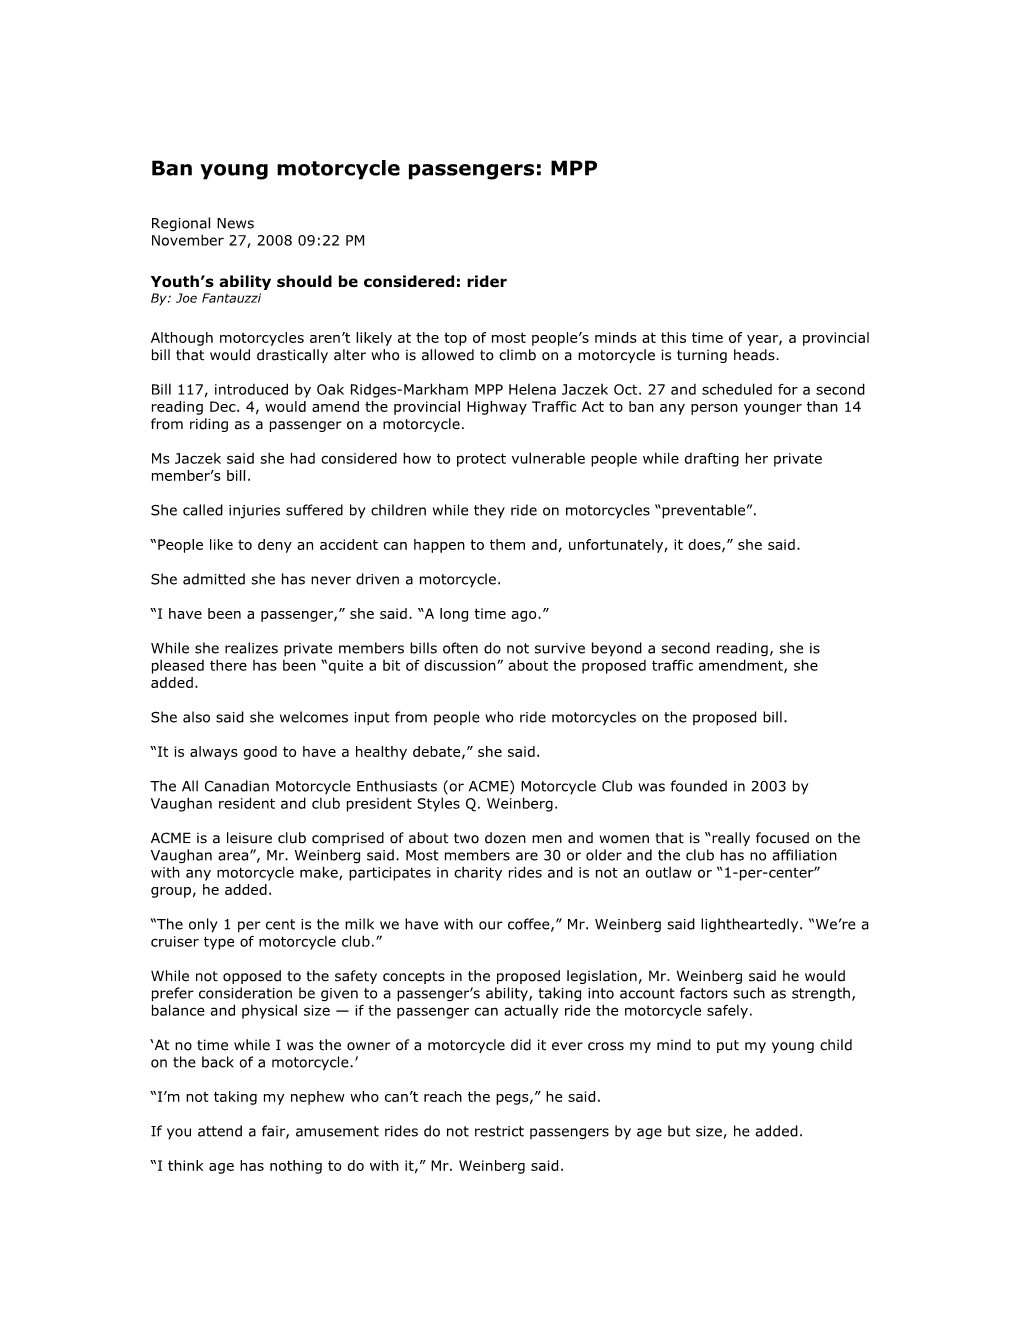 Ban Young Motorcycle Passengers: MPP